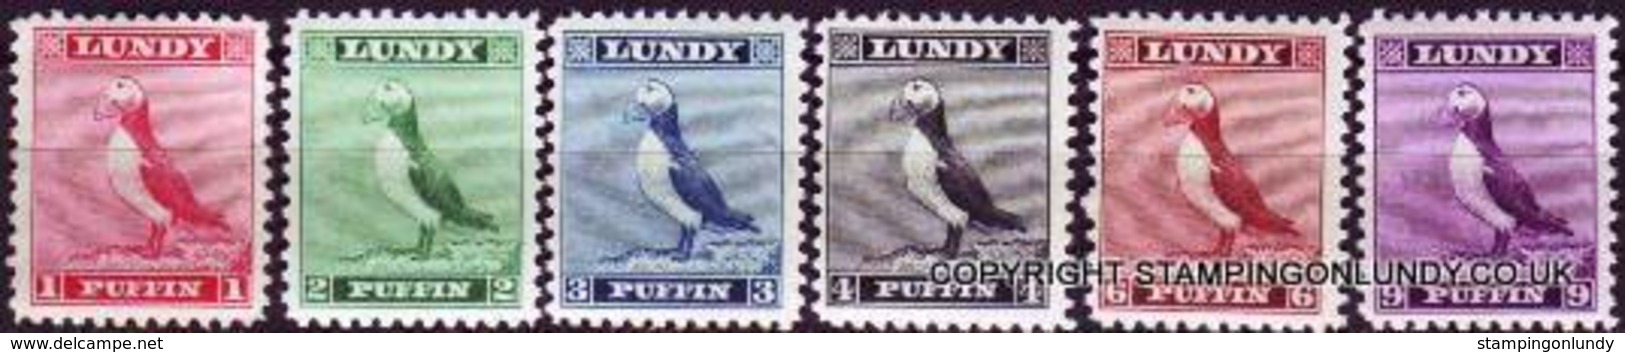 #L44. Great Britain Lundy Island Puffin Stamp 1957 Puffins Set Mint. Free UK P+p! Offers? - Emissione Locali